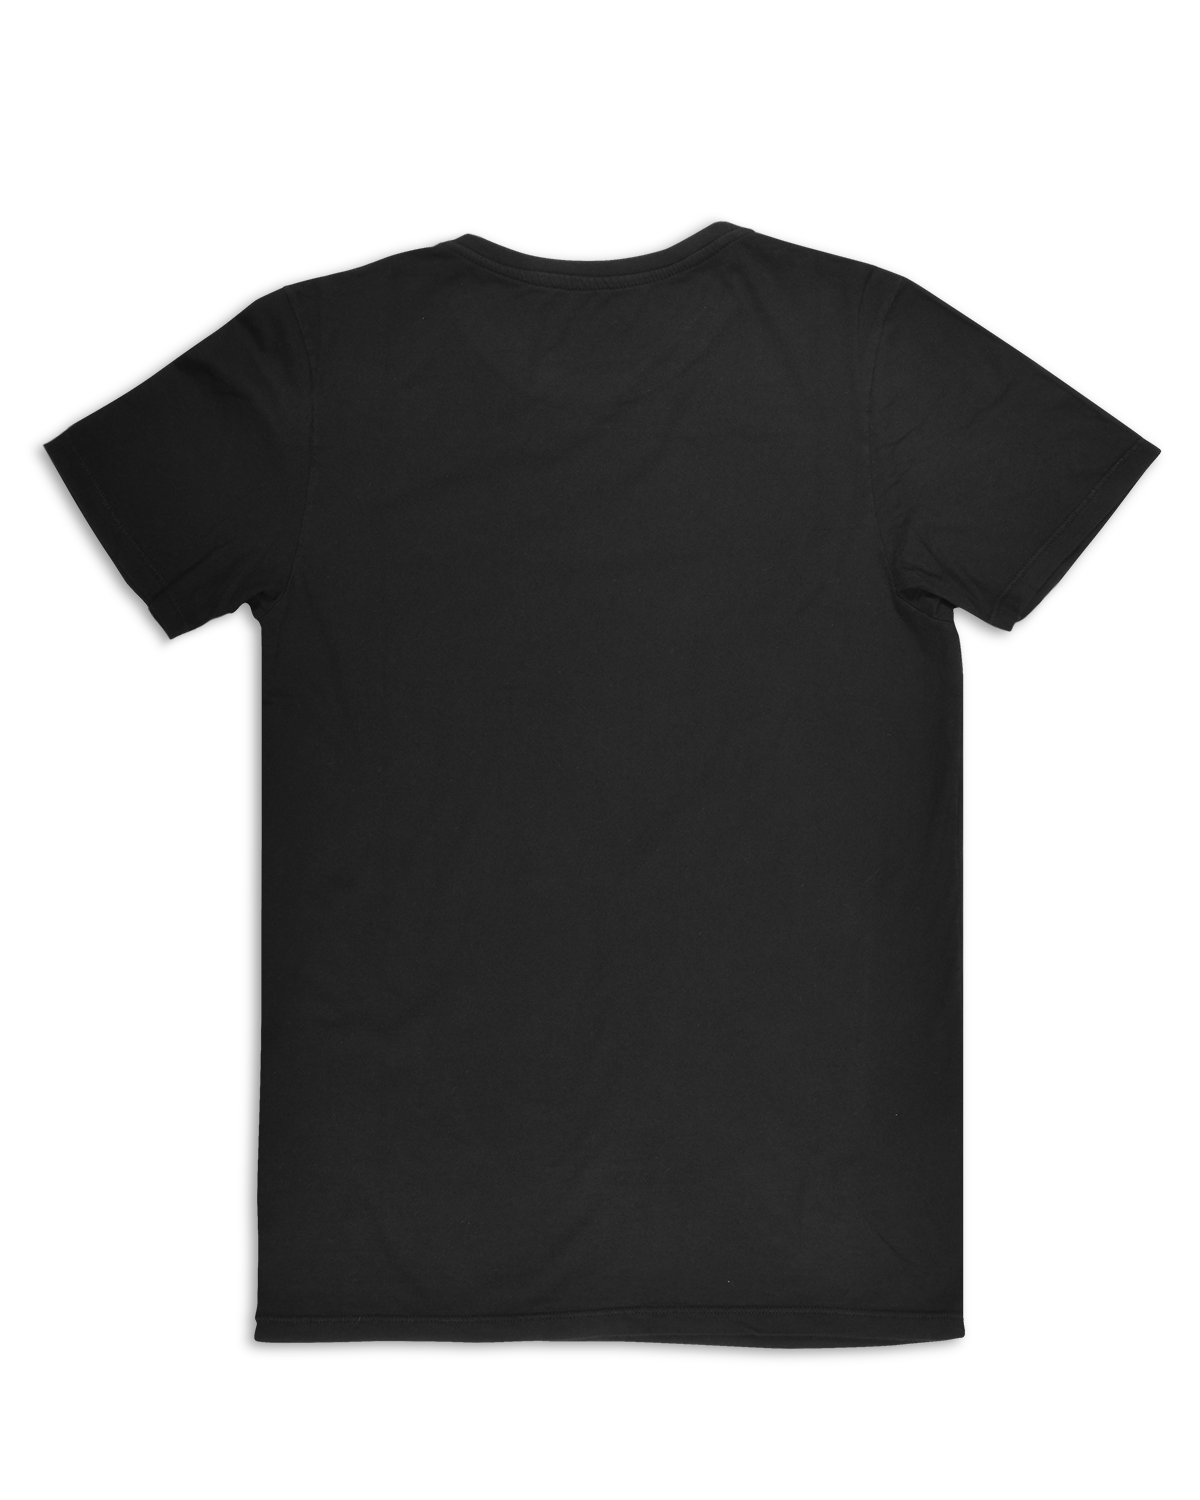 Shirt Black Transparent Image - PNG Play